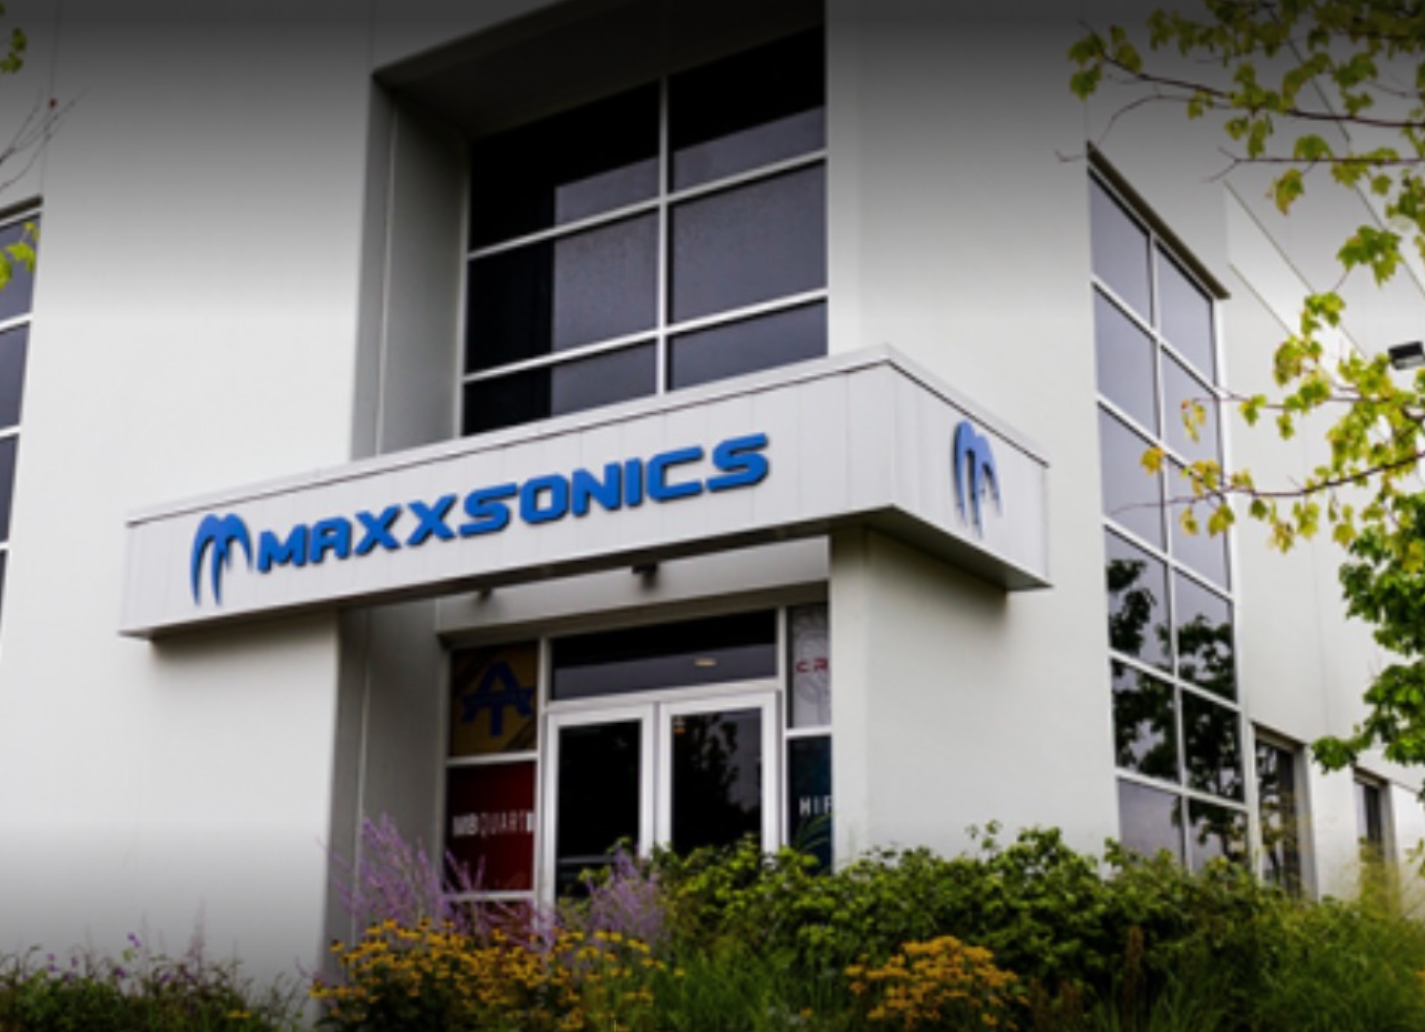 Maxxsonics building